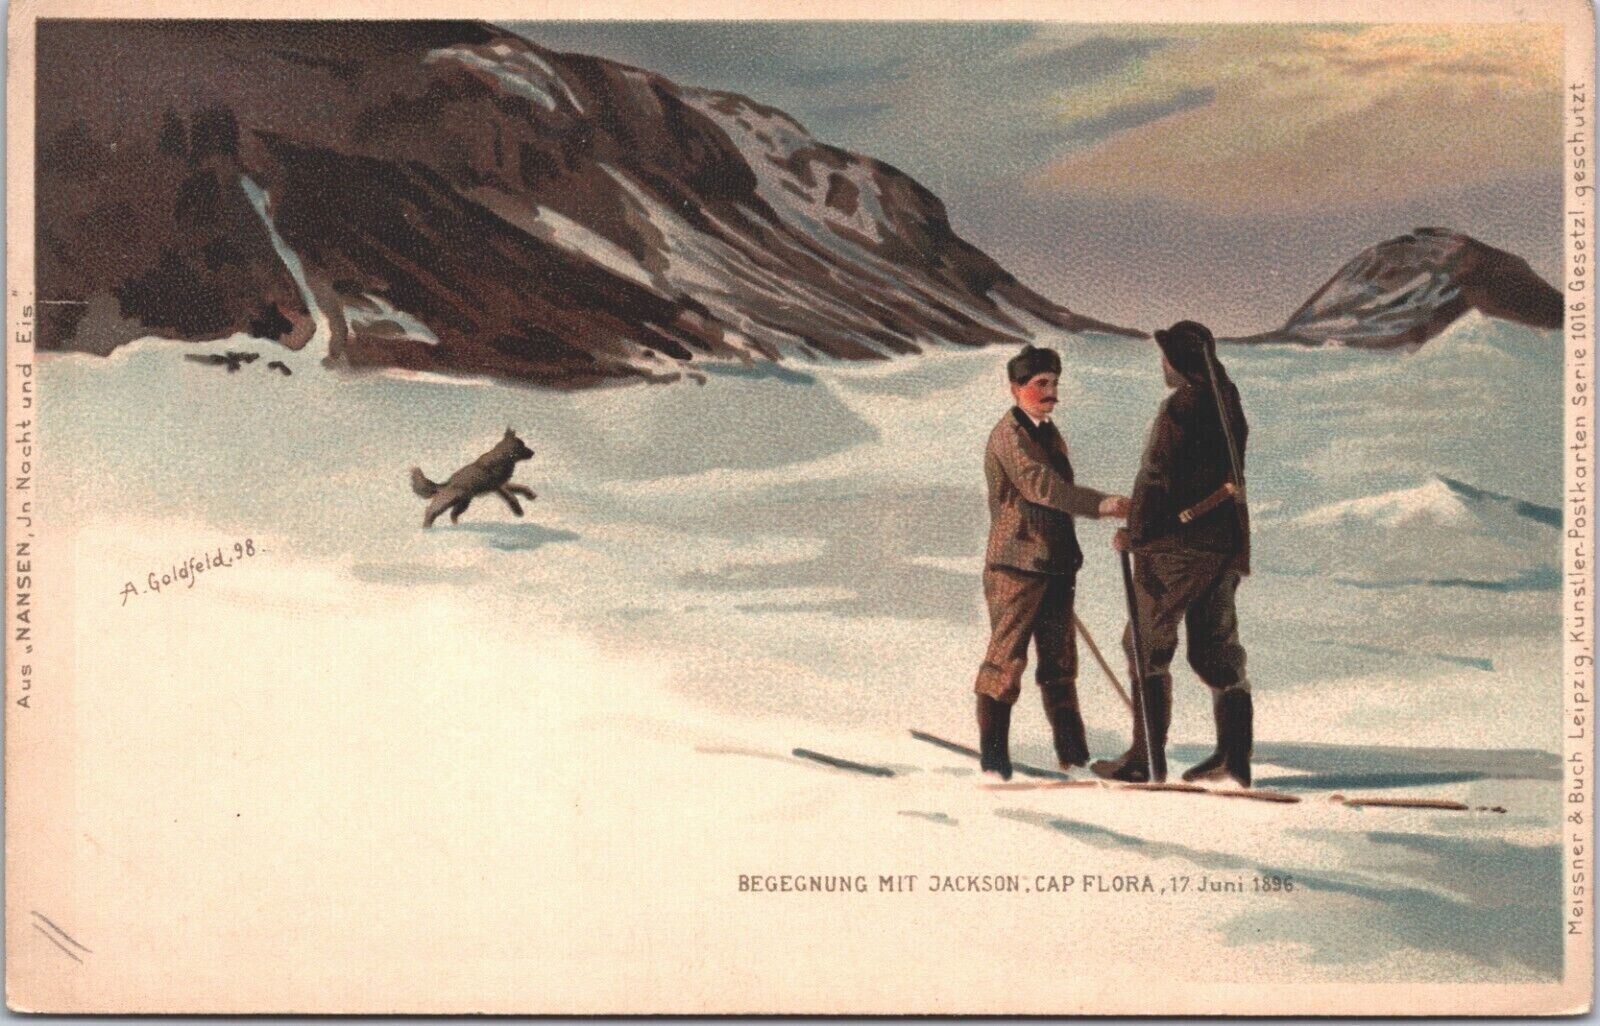 A. Goldfeld Arctic Expedition Nansen Johansen Polar 1896 Vintage Postcard 03.81